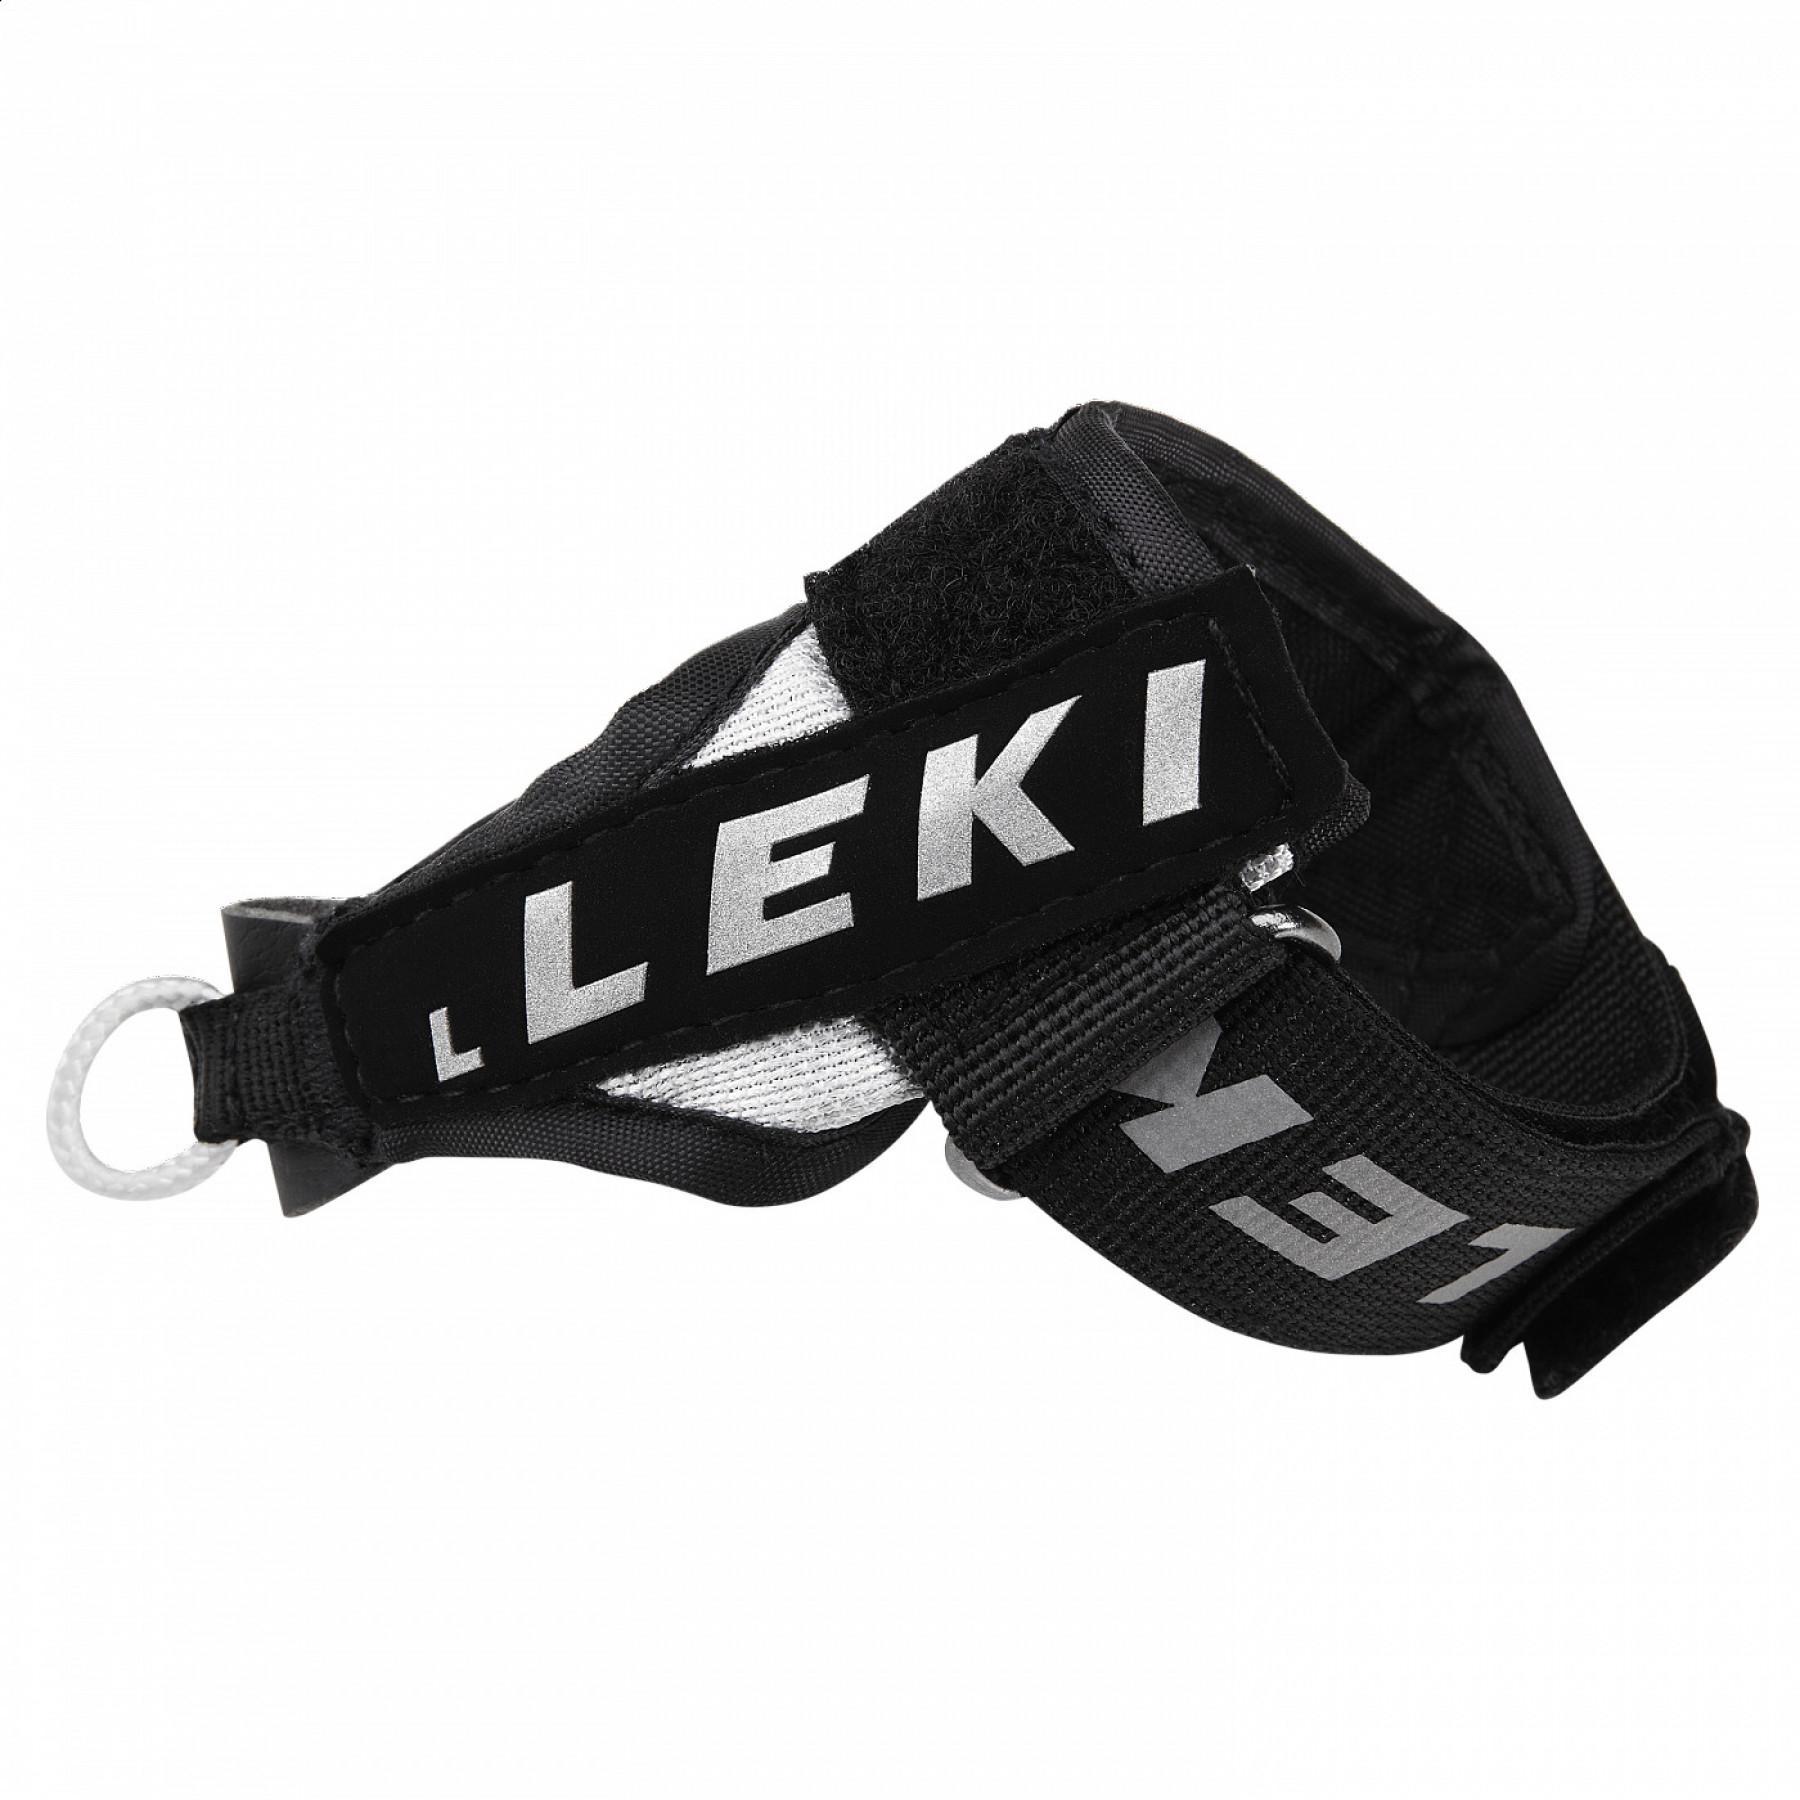 Handriem Leki Trigger shark strap